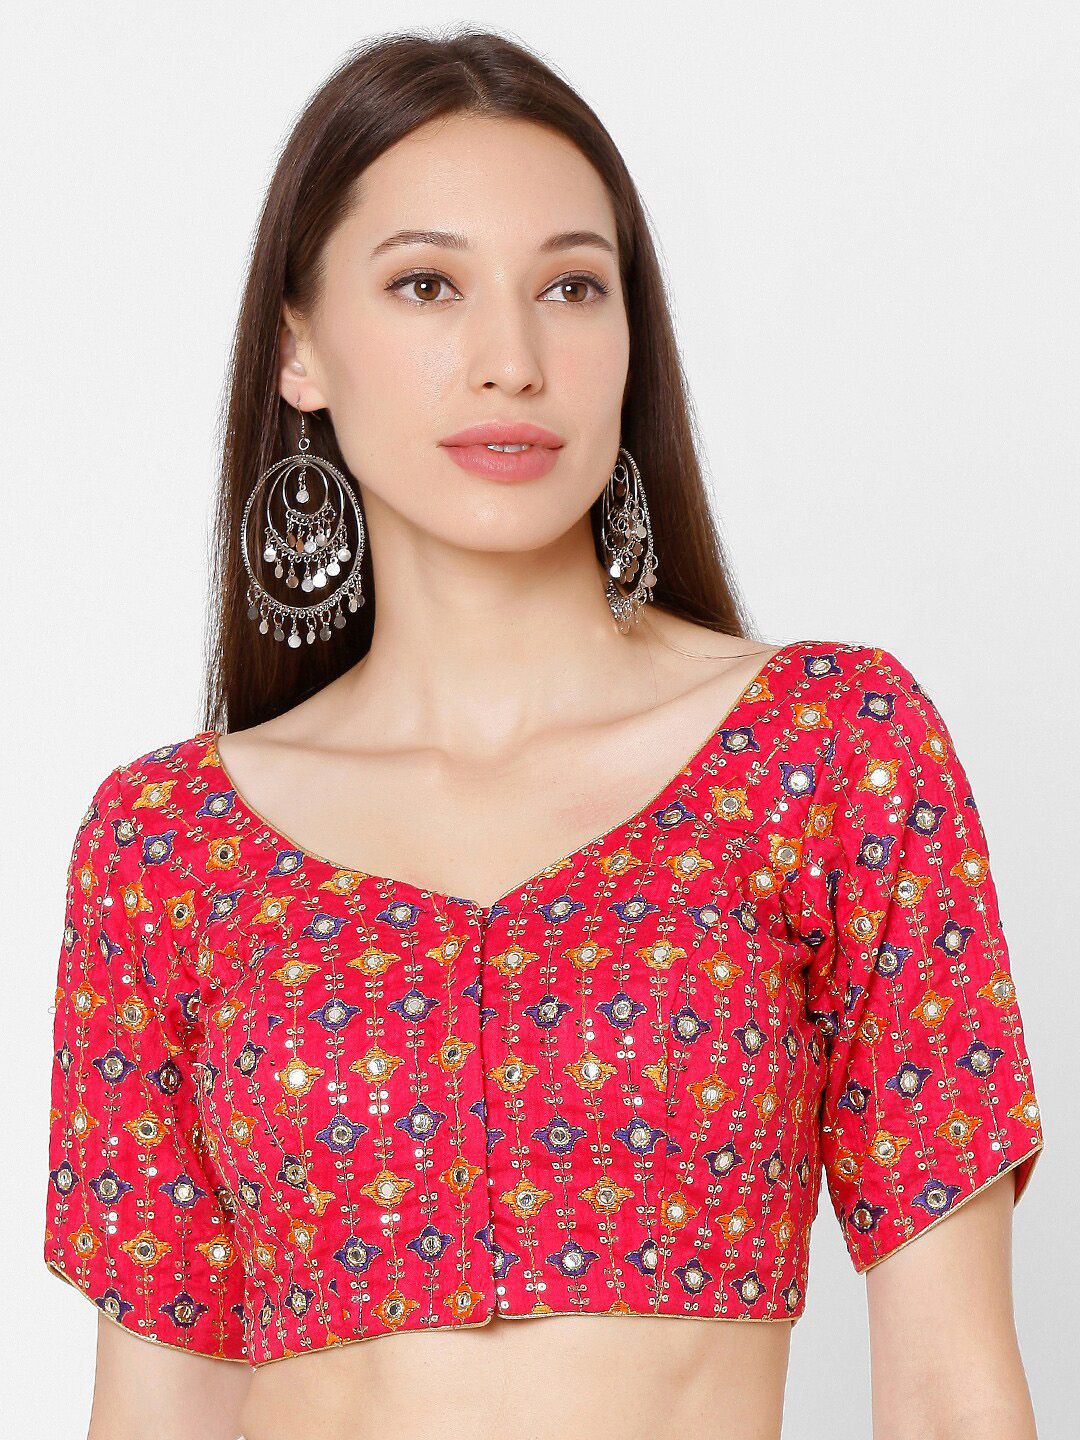 SALWAR STUDIO Magenta-Pink & Blue Coloured Embroidered Brocade Saree Blouse Price in India